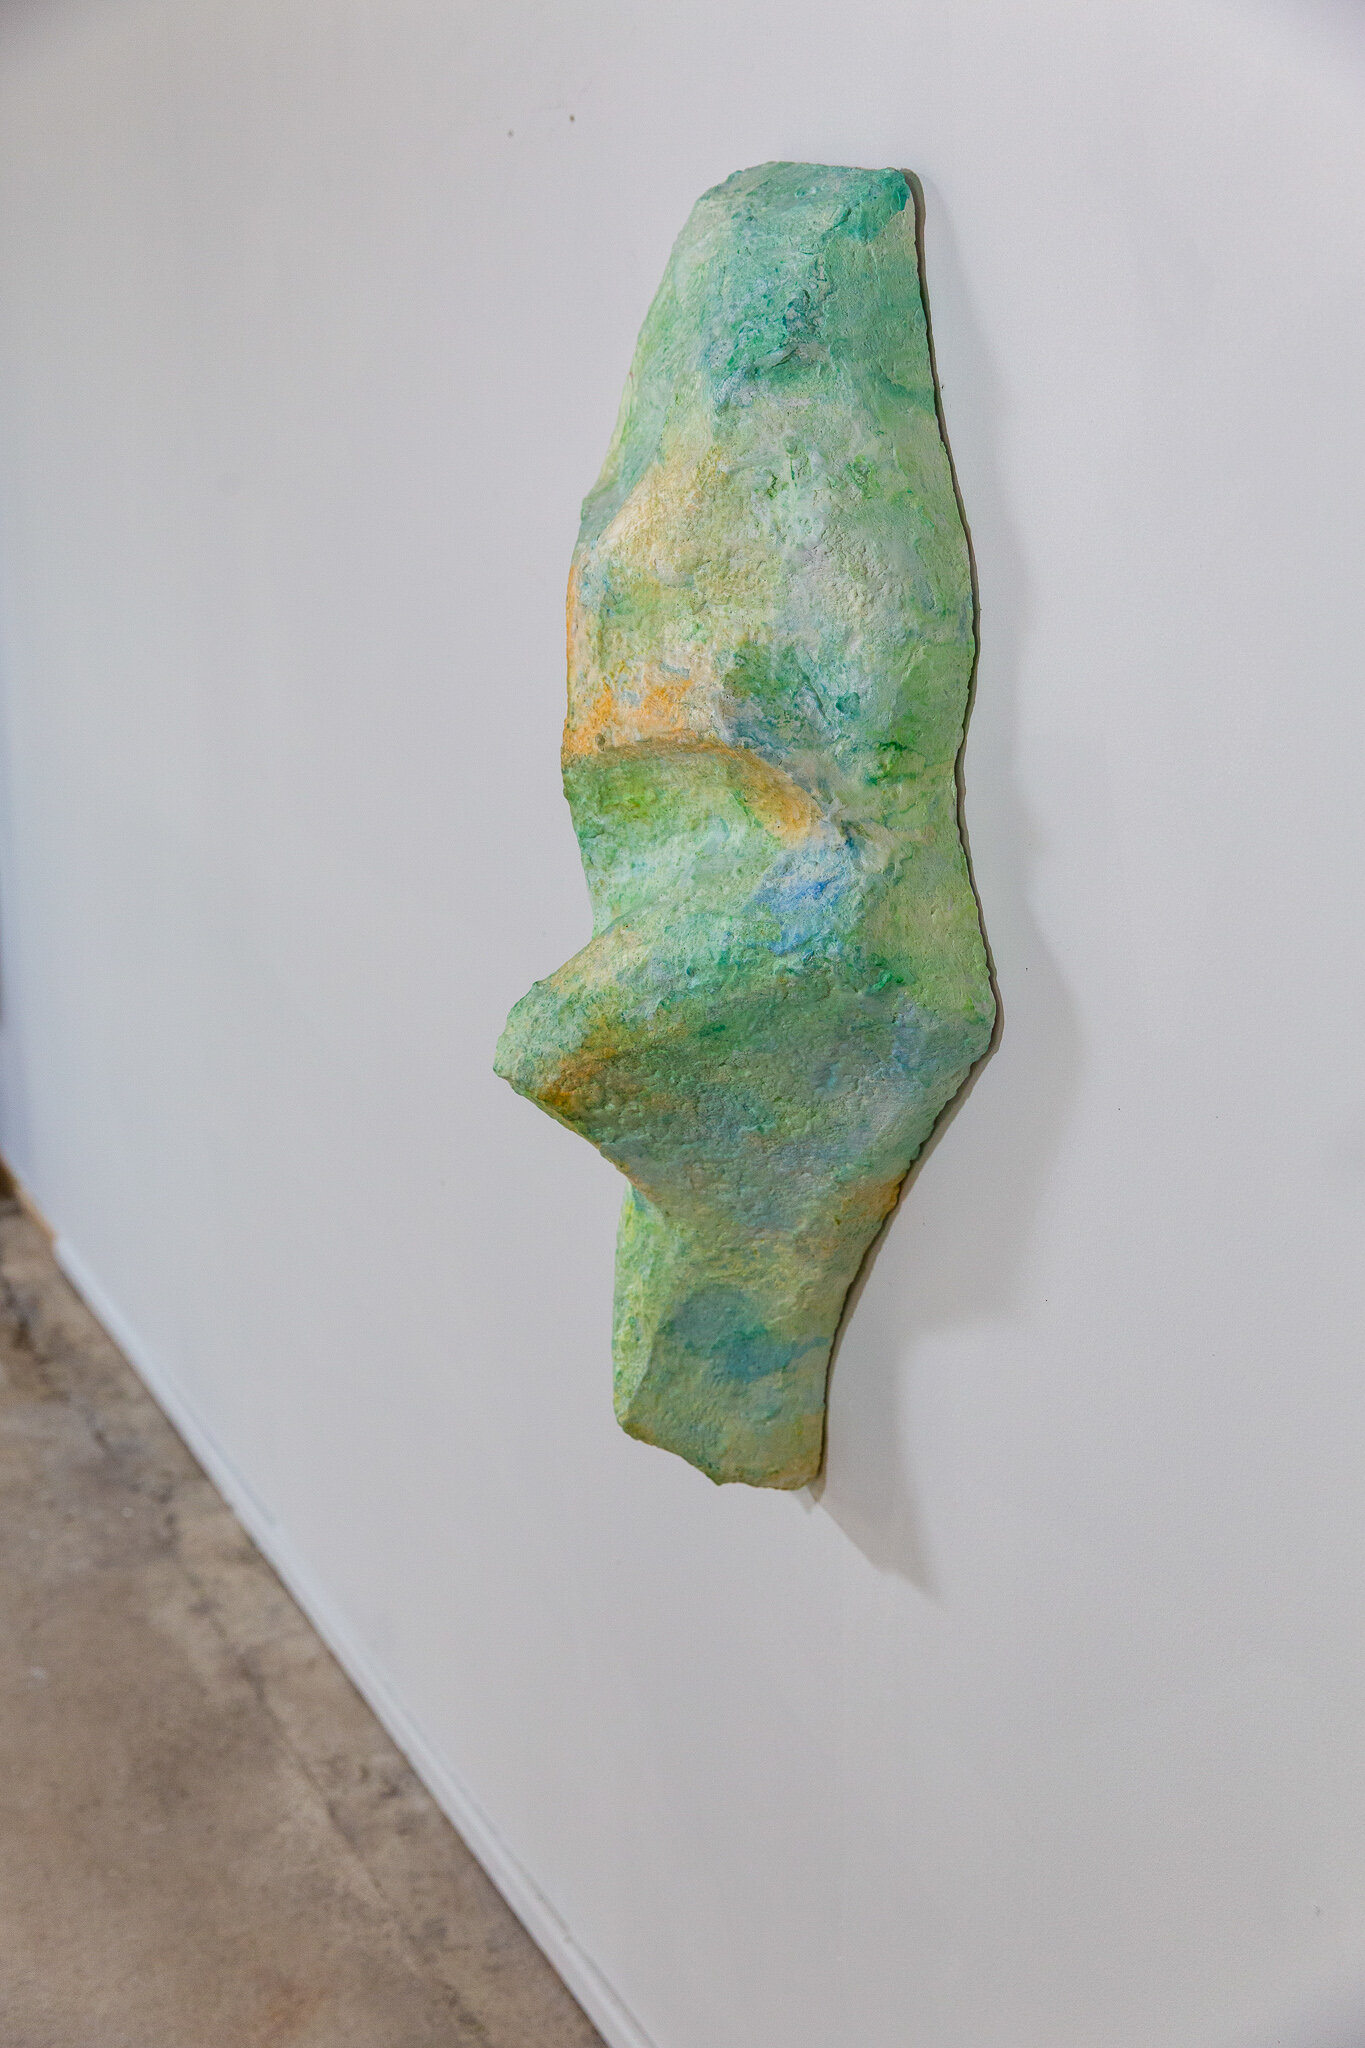   Strange Fish , 2020 Styrofoam, plaster, paper mache, paper pulp, liquid watercolor, encaustic, 24x14x8 inches 